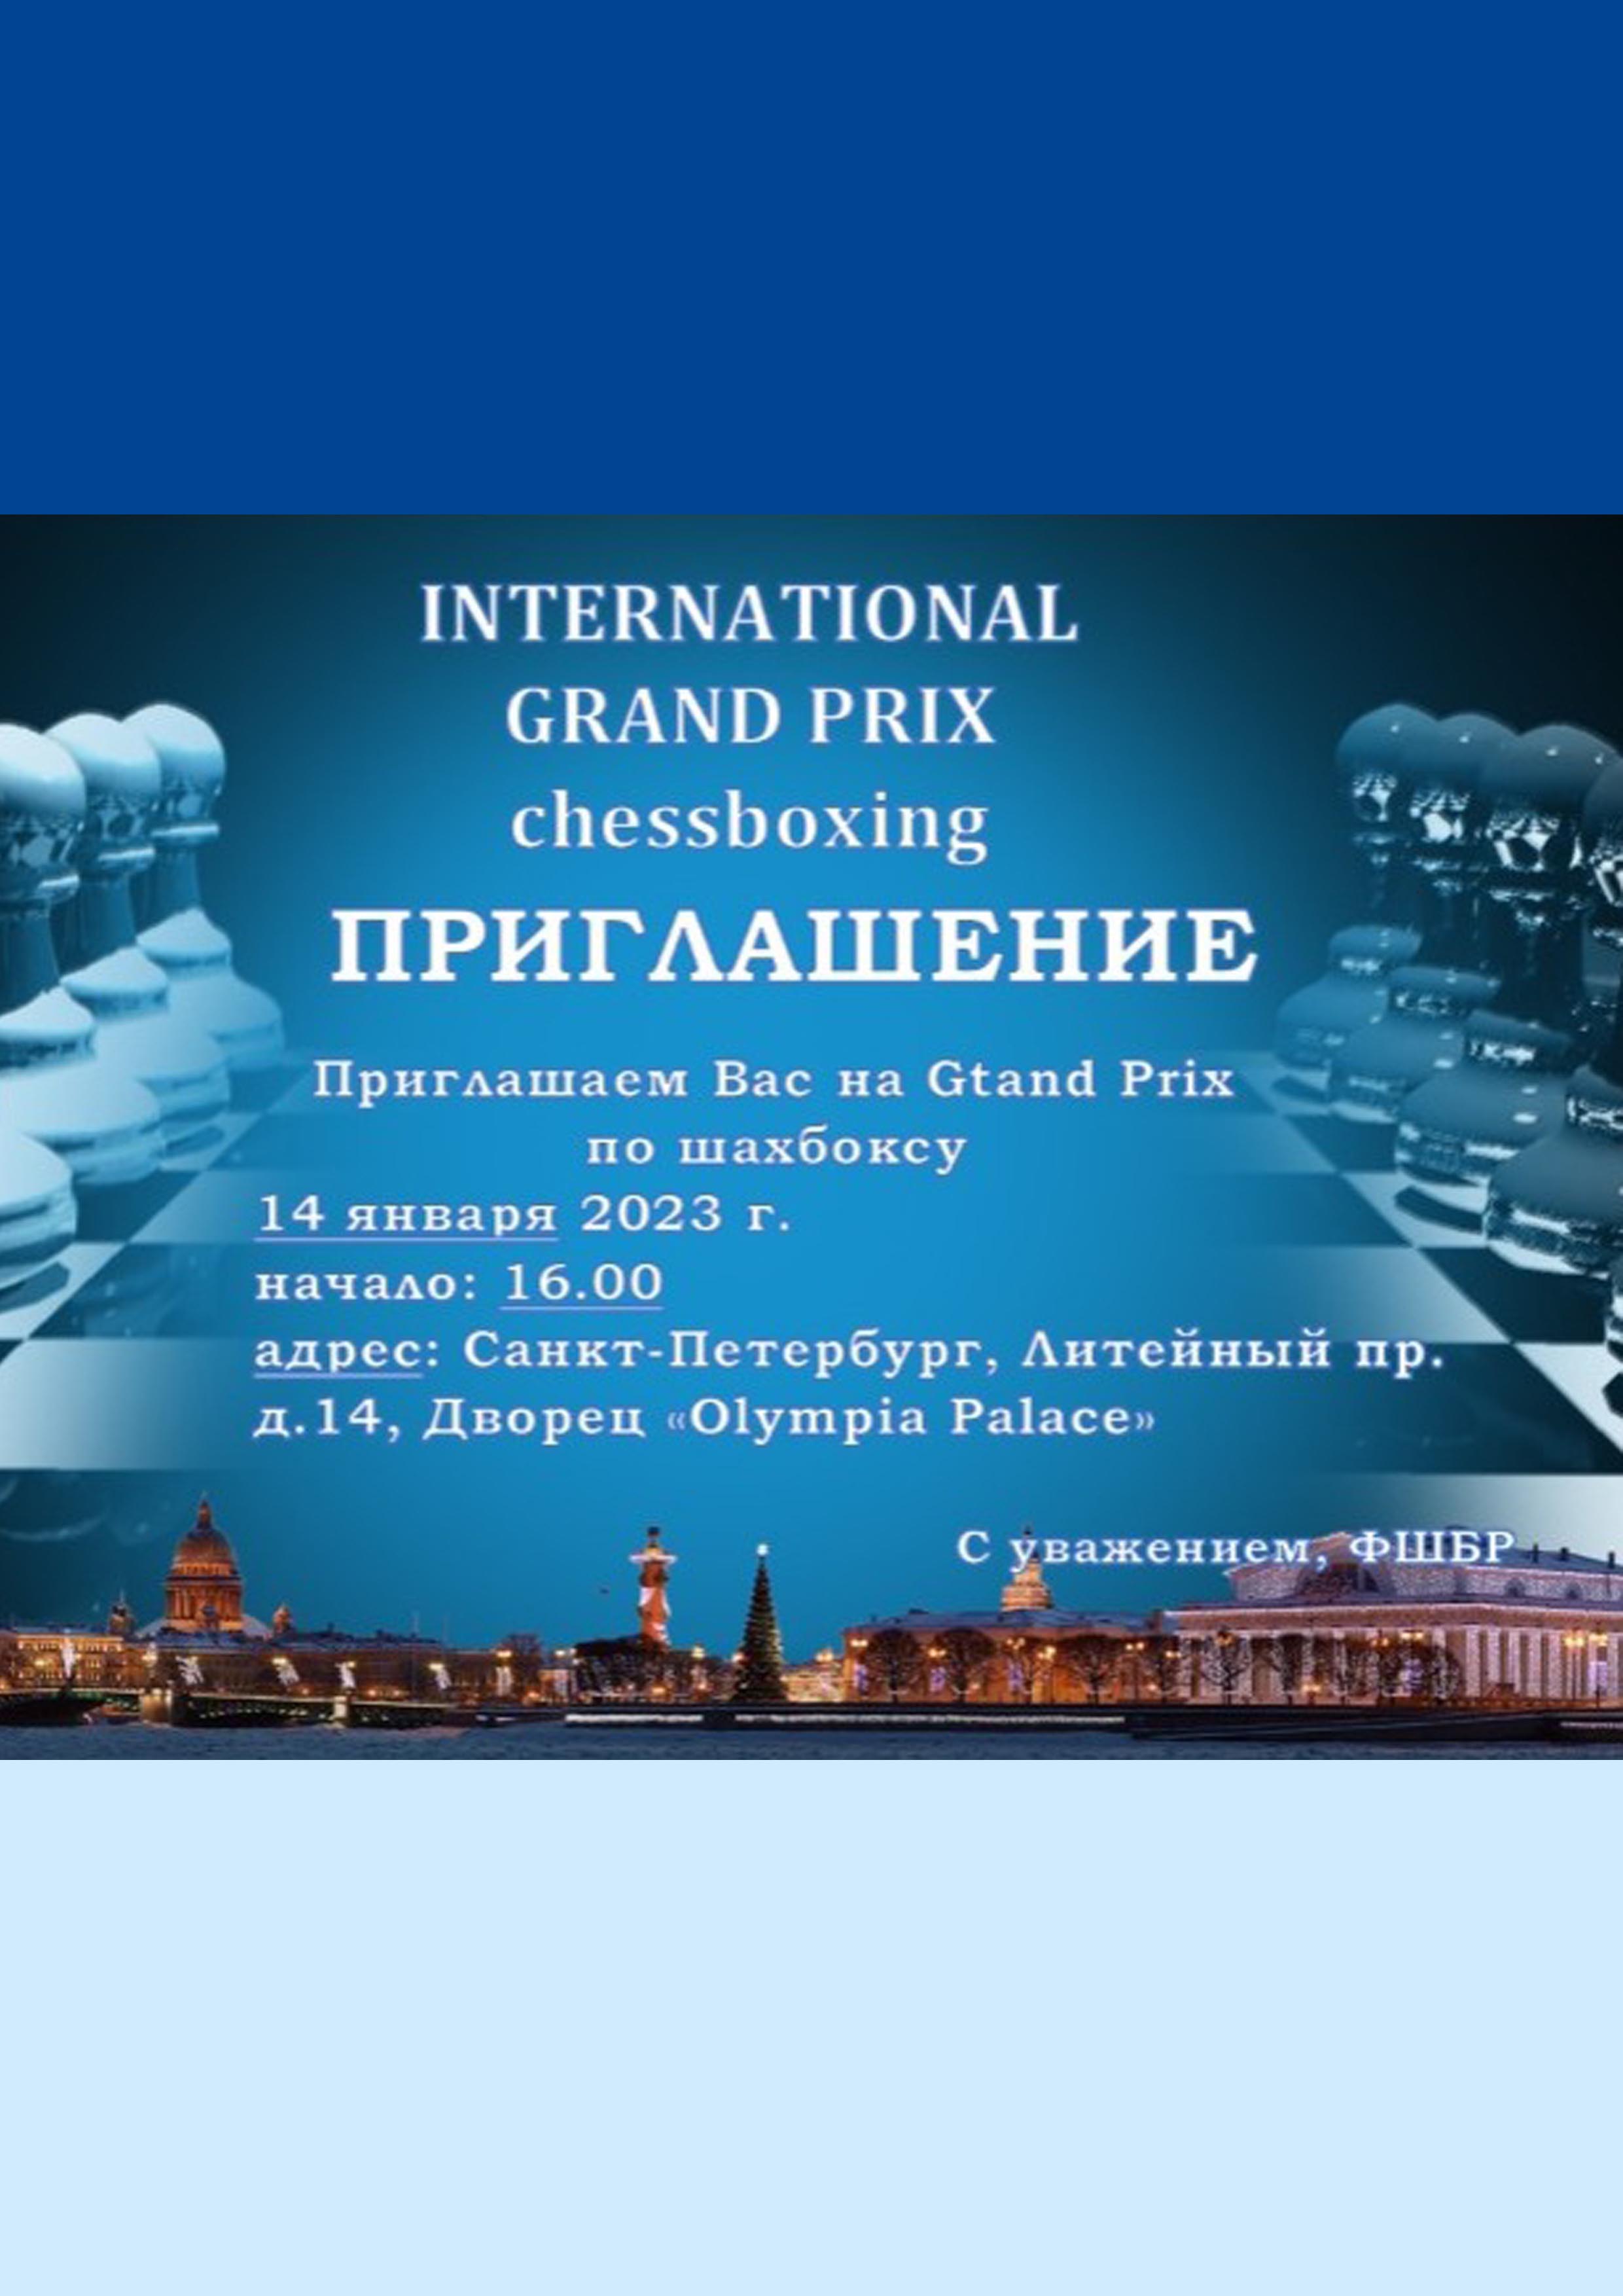 International GRAND PRIX CHESSBOXING 14  जनवरी
 2023  वर्ष
